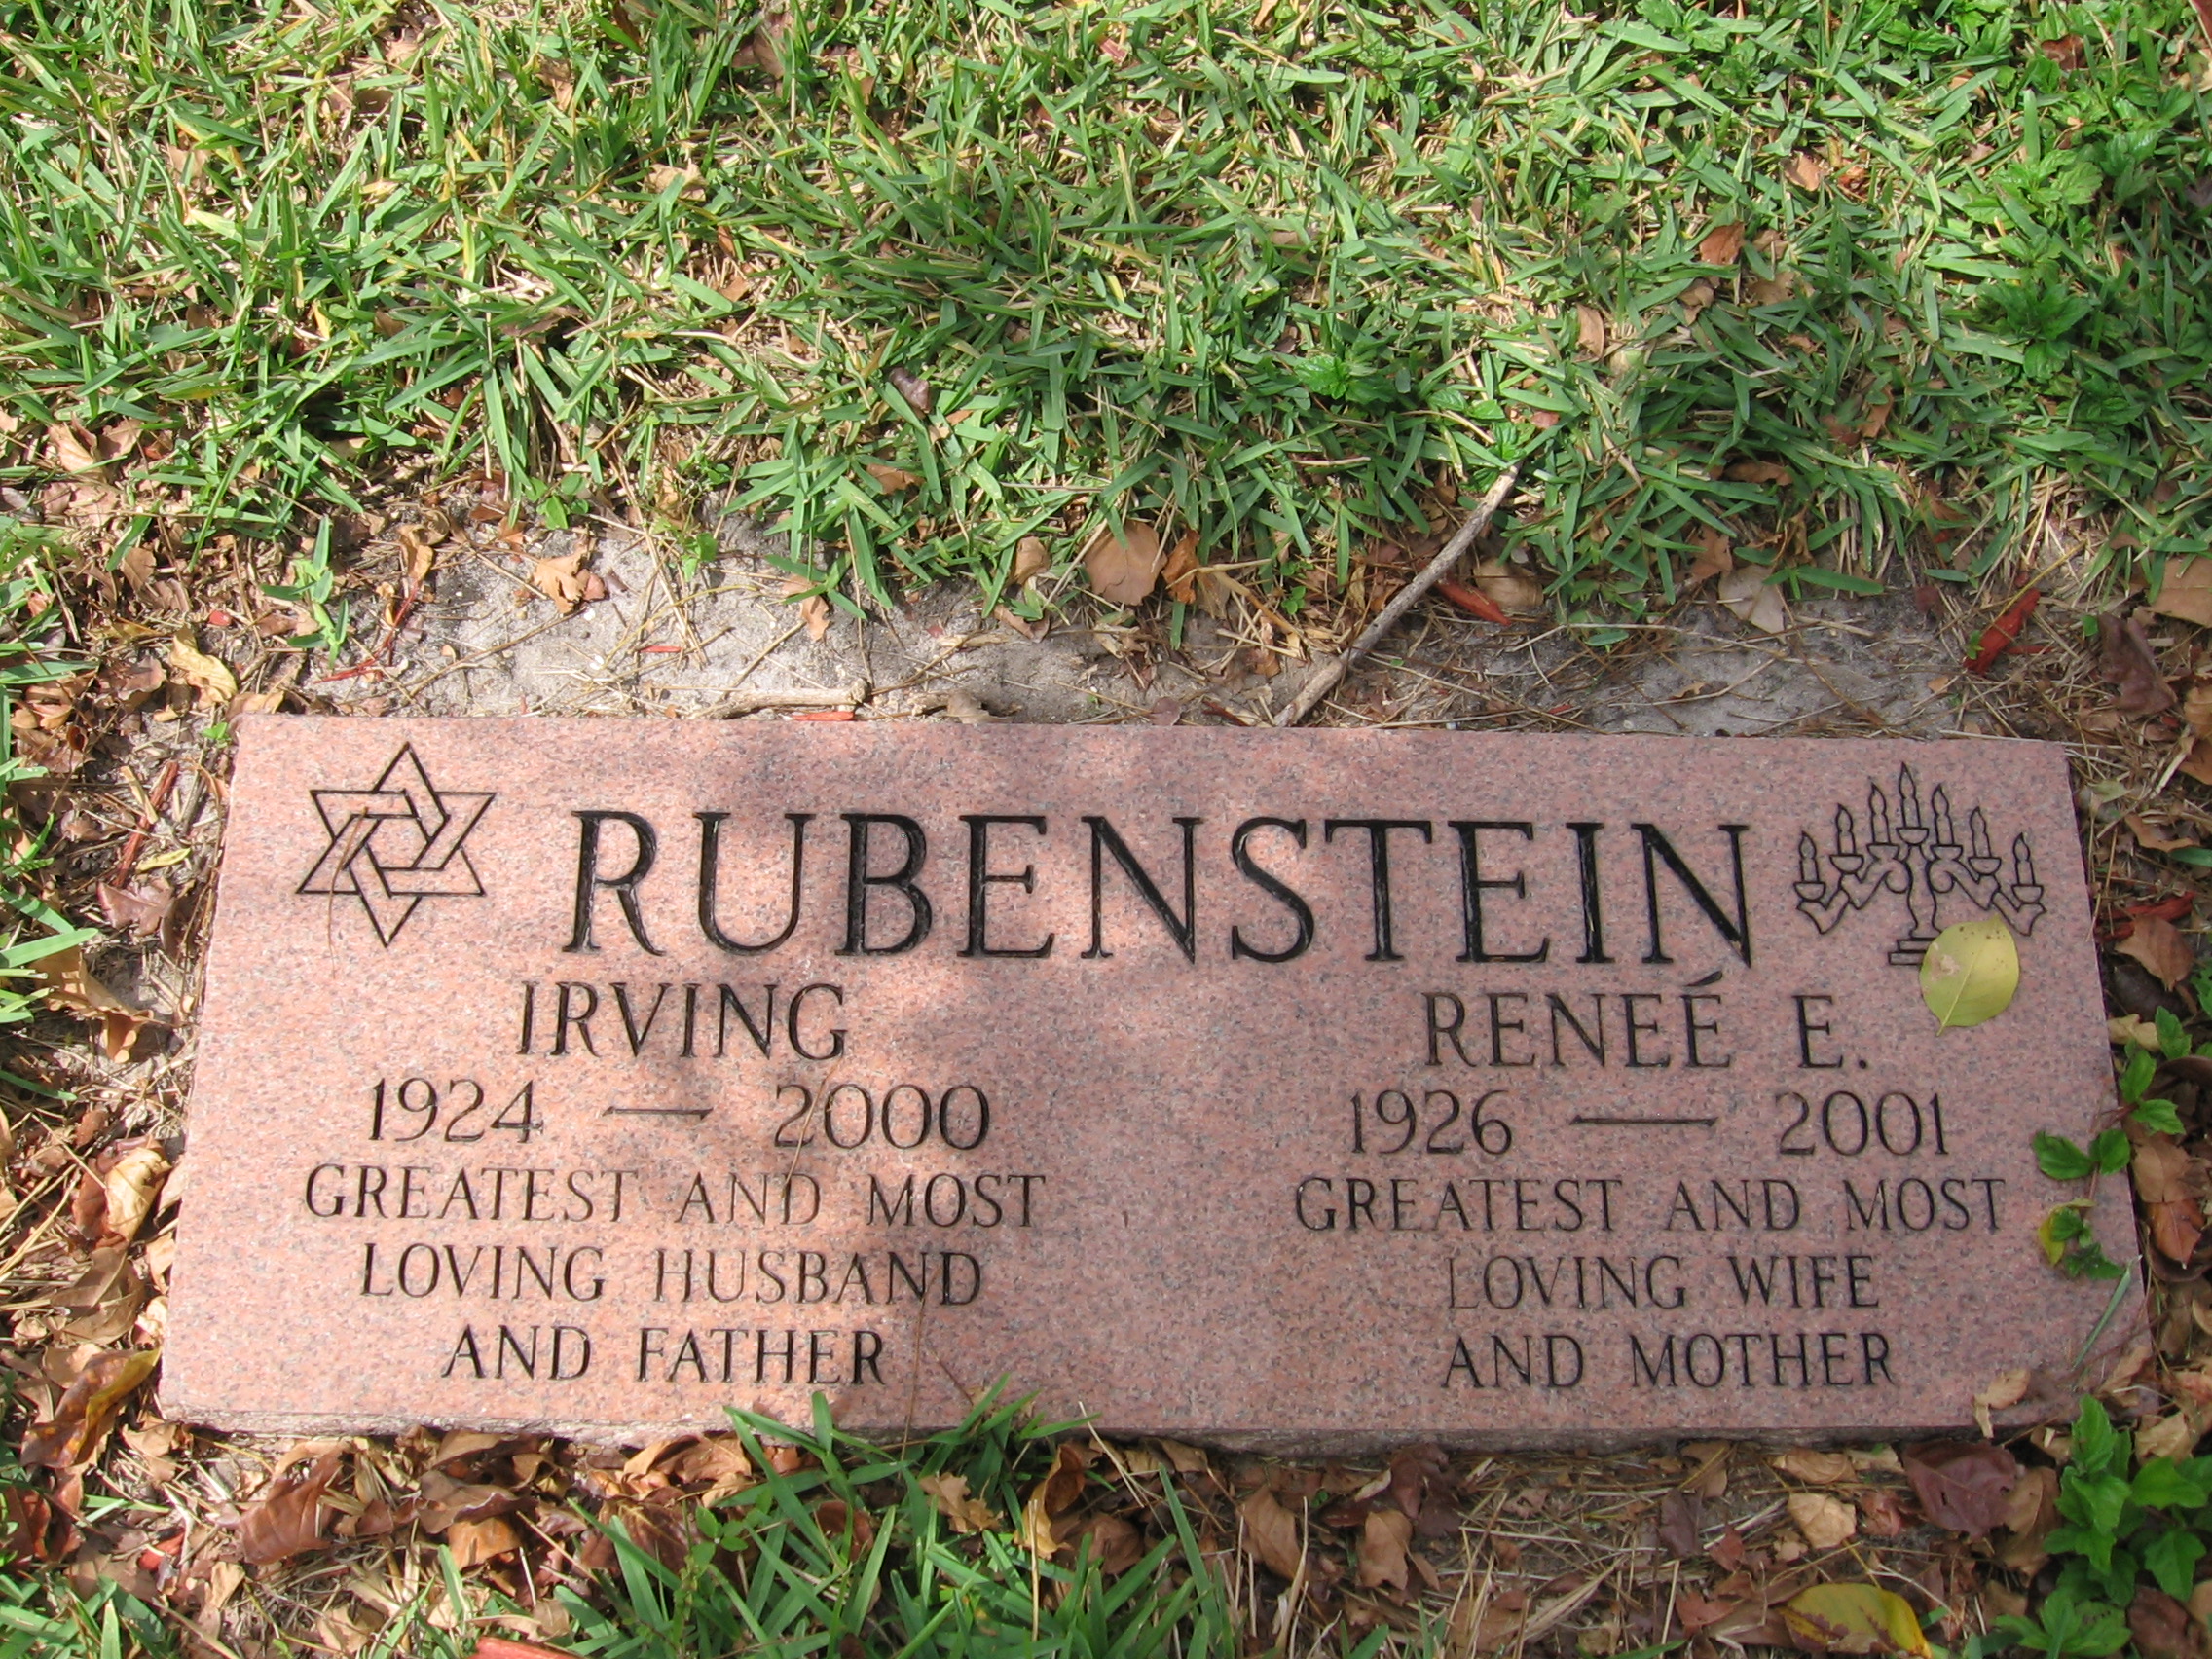 Irving Rubenstein